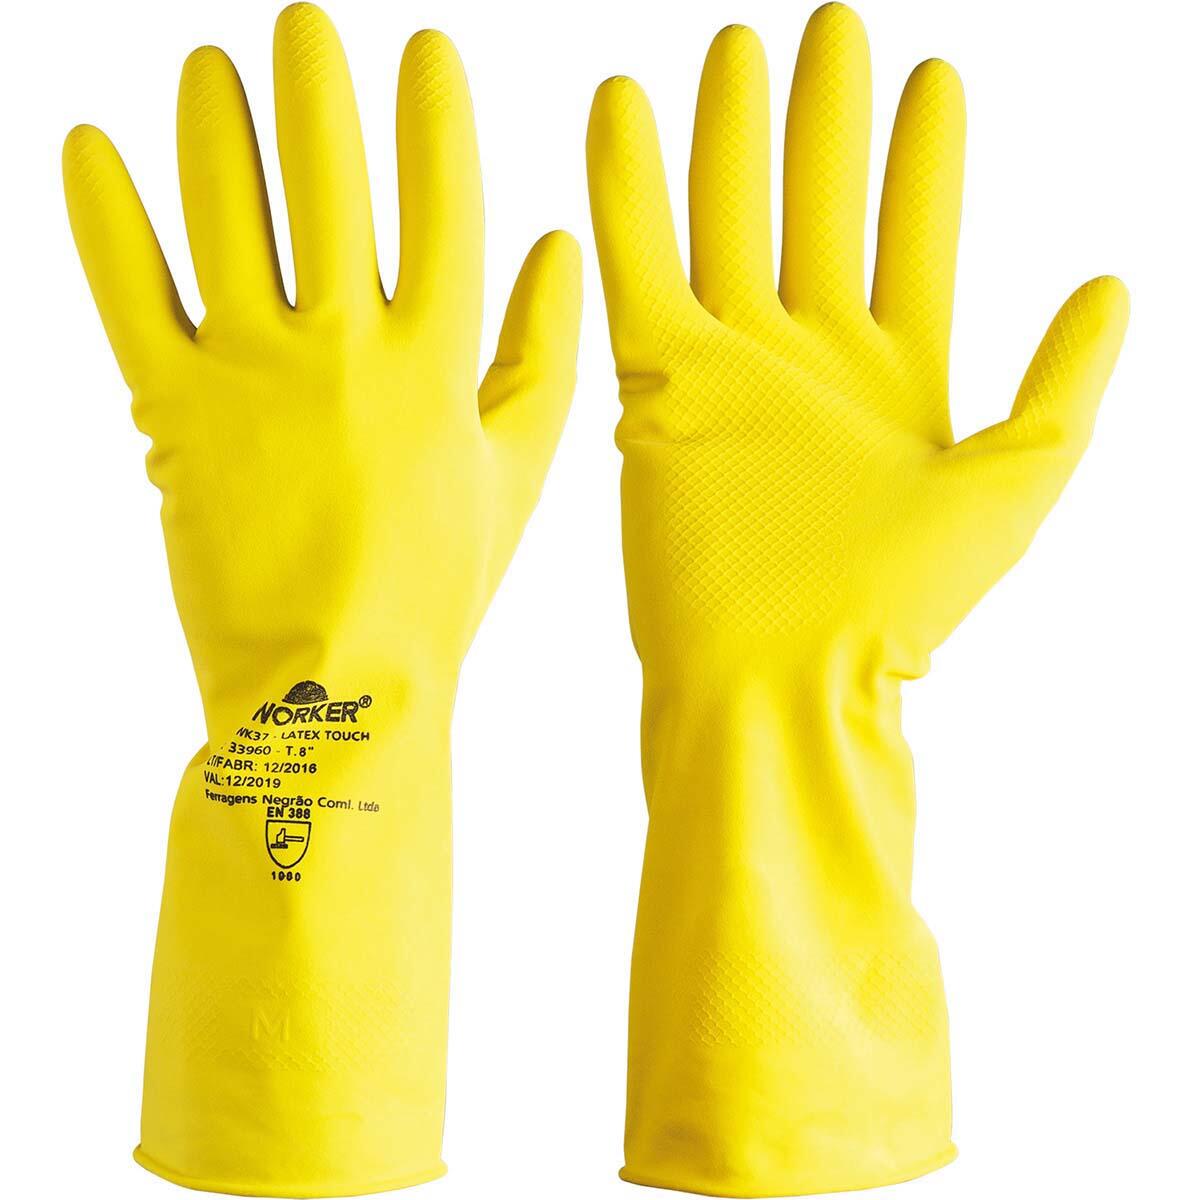 Luva de Látex Touch P Antiderrapante Flocada Amarela Worker